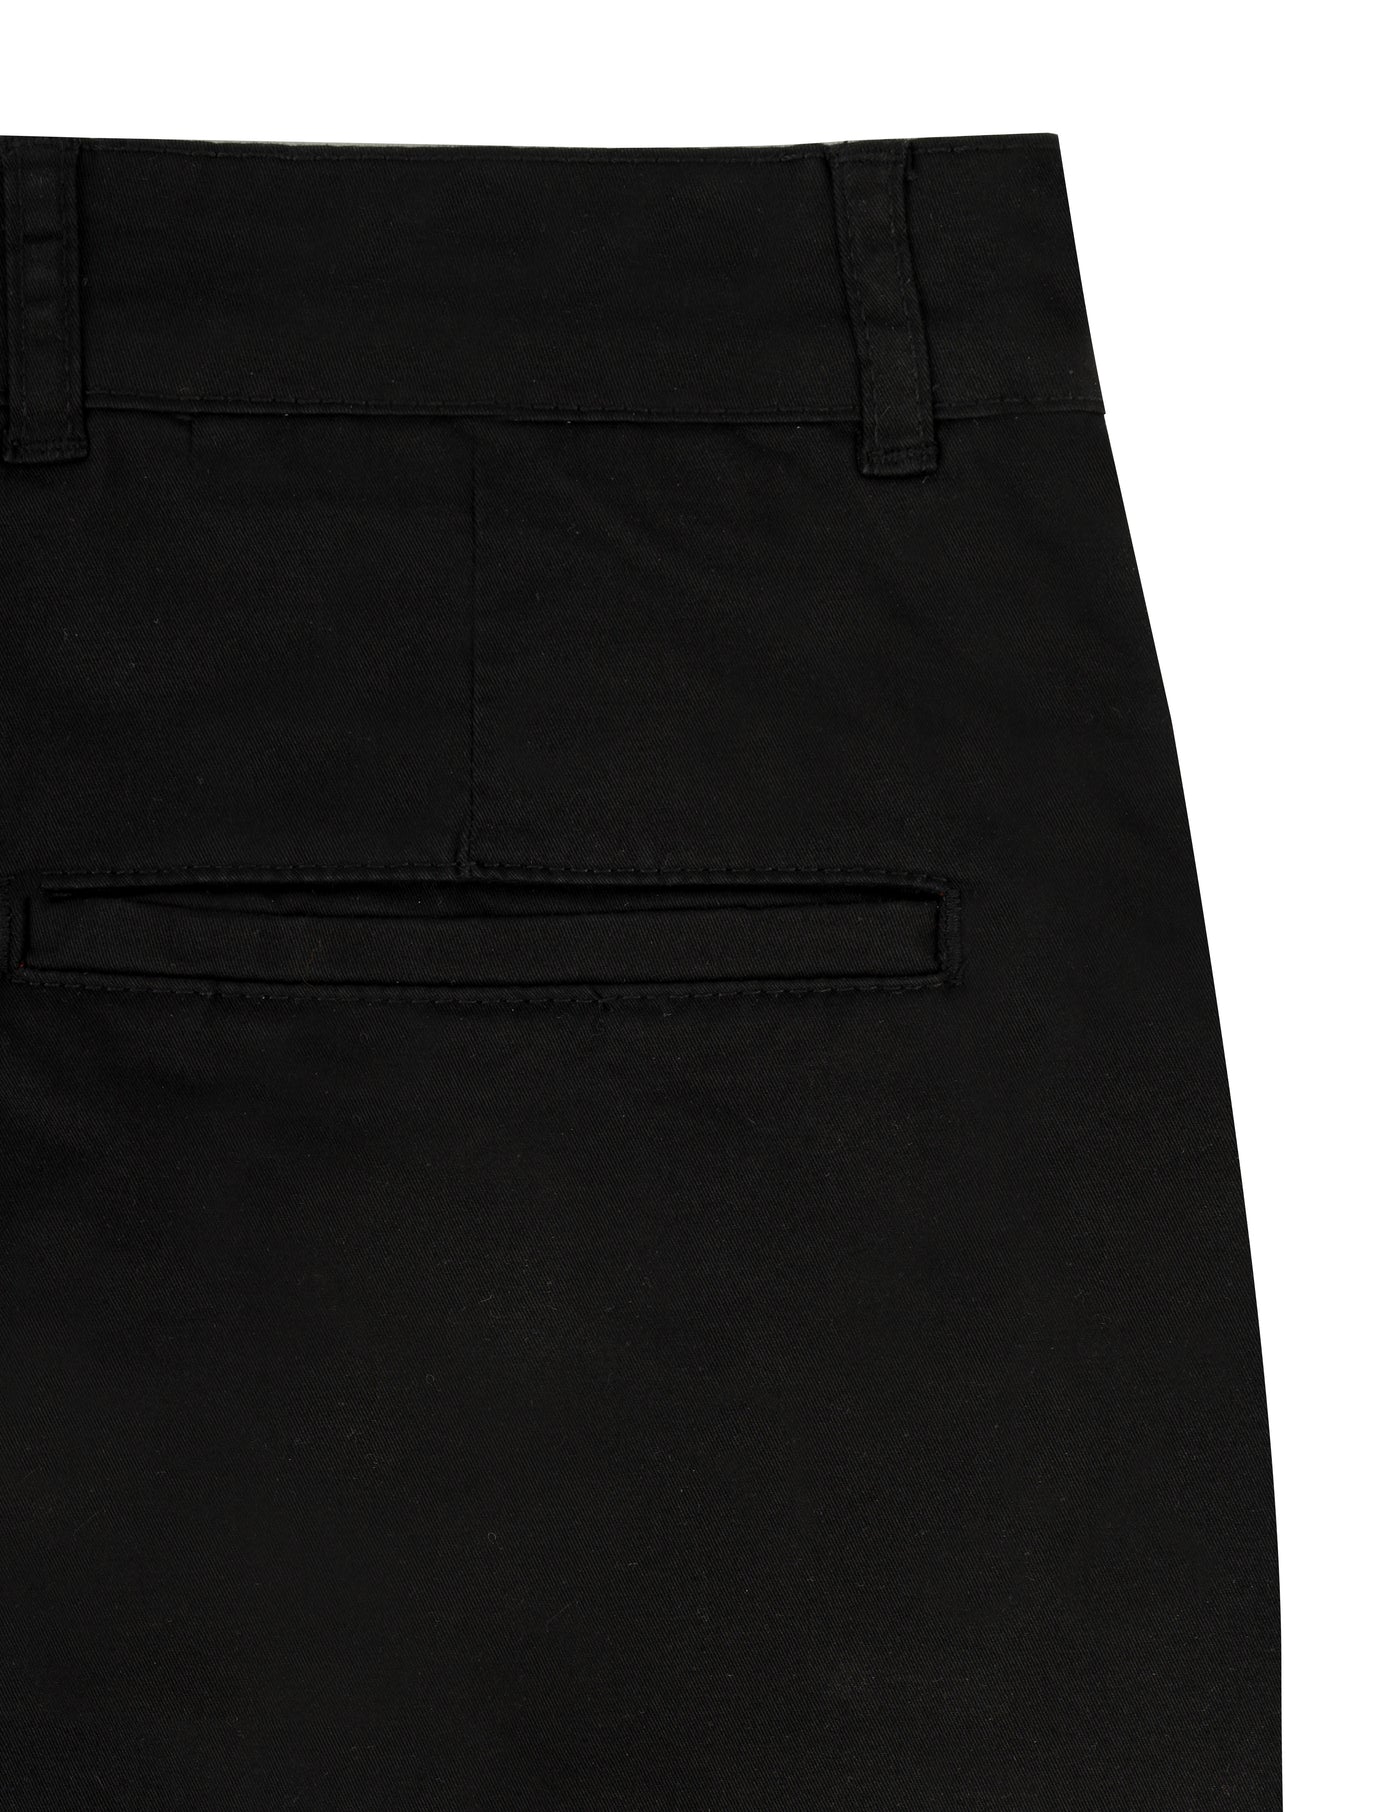 Chino Twill Cotton & Elastic Black Gabardine Pant